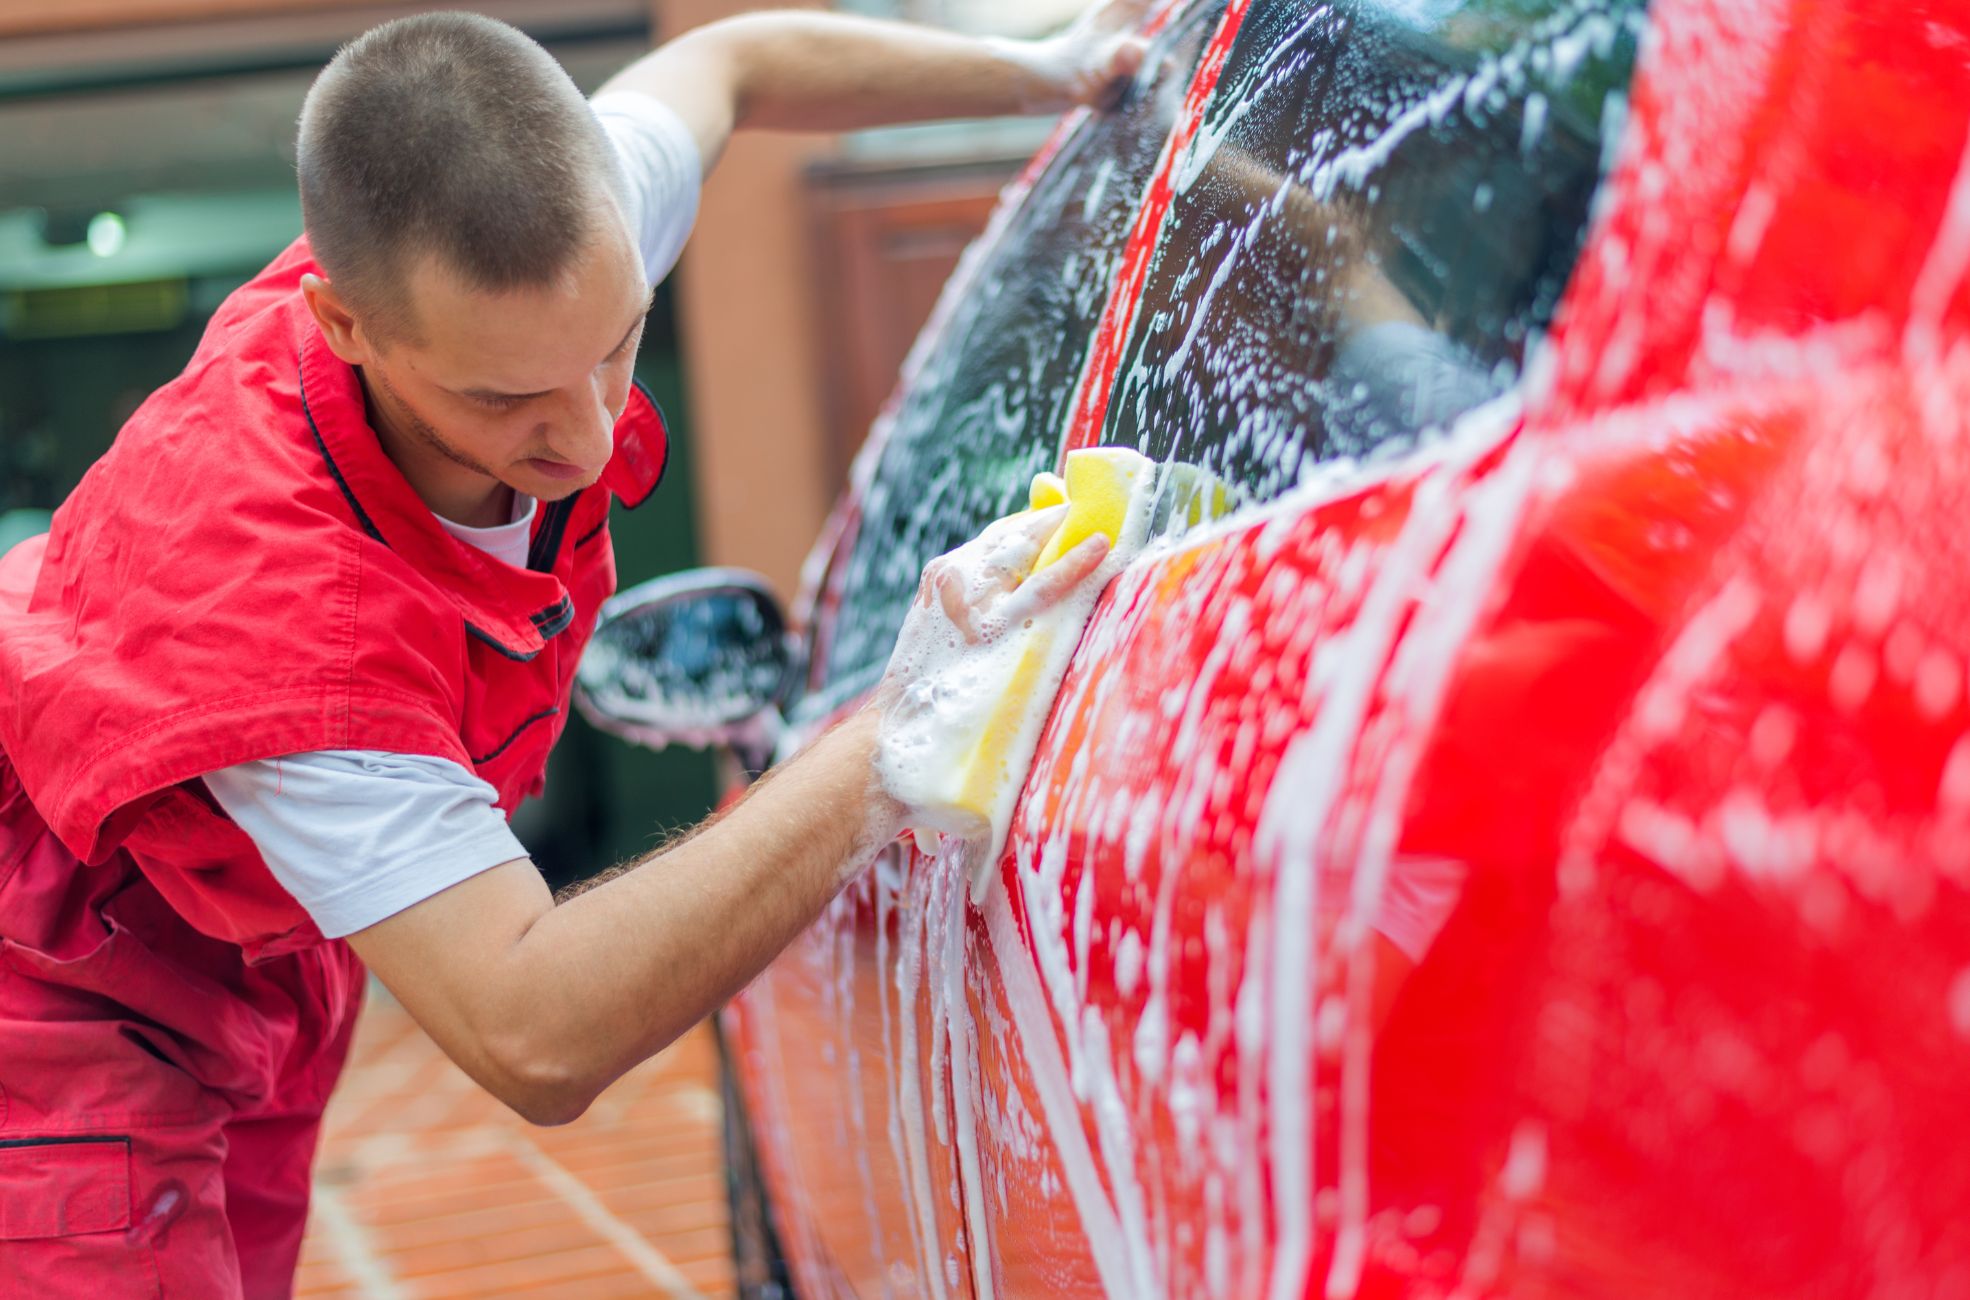 Stock image man working at car wash